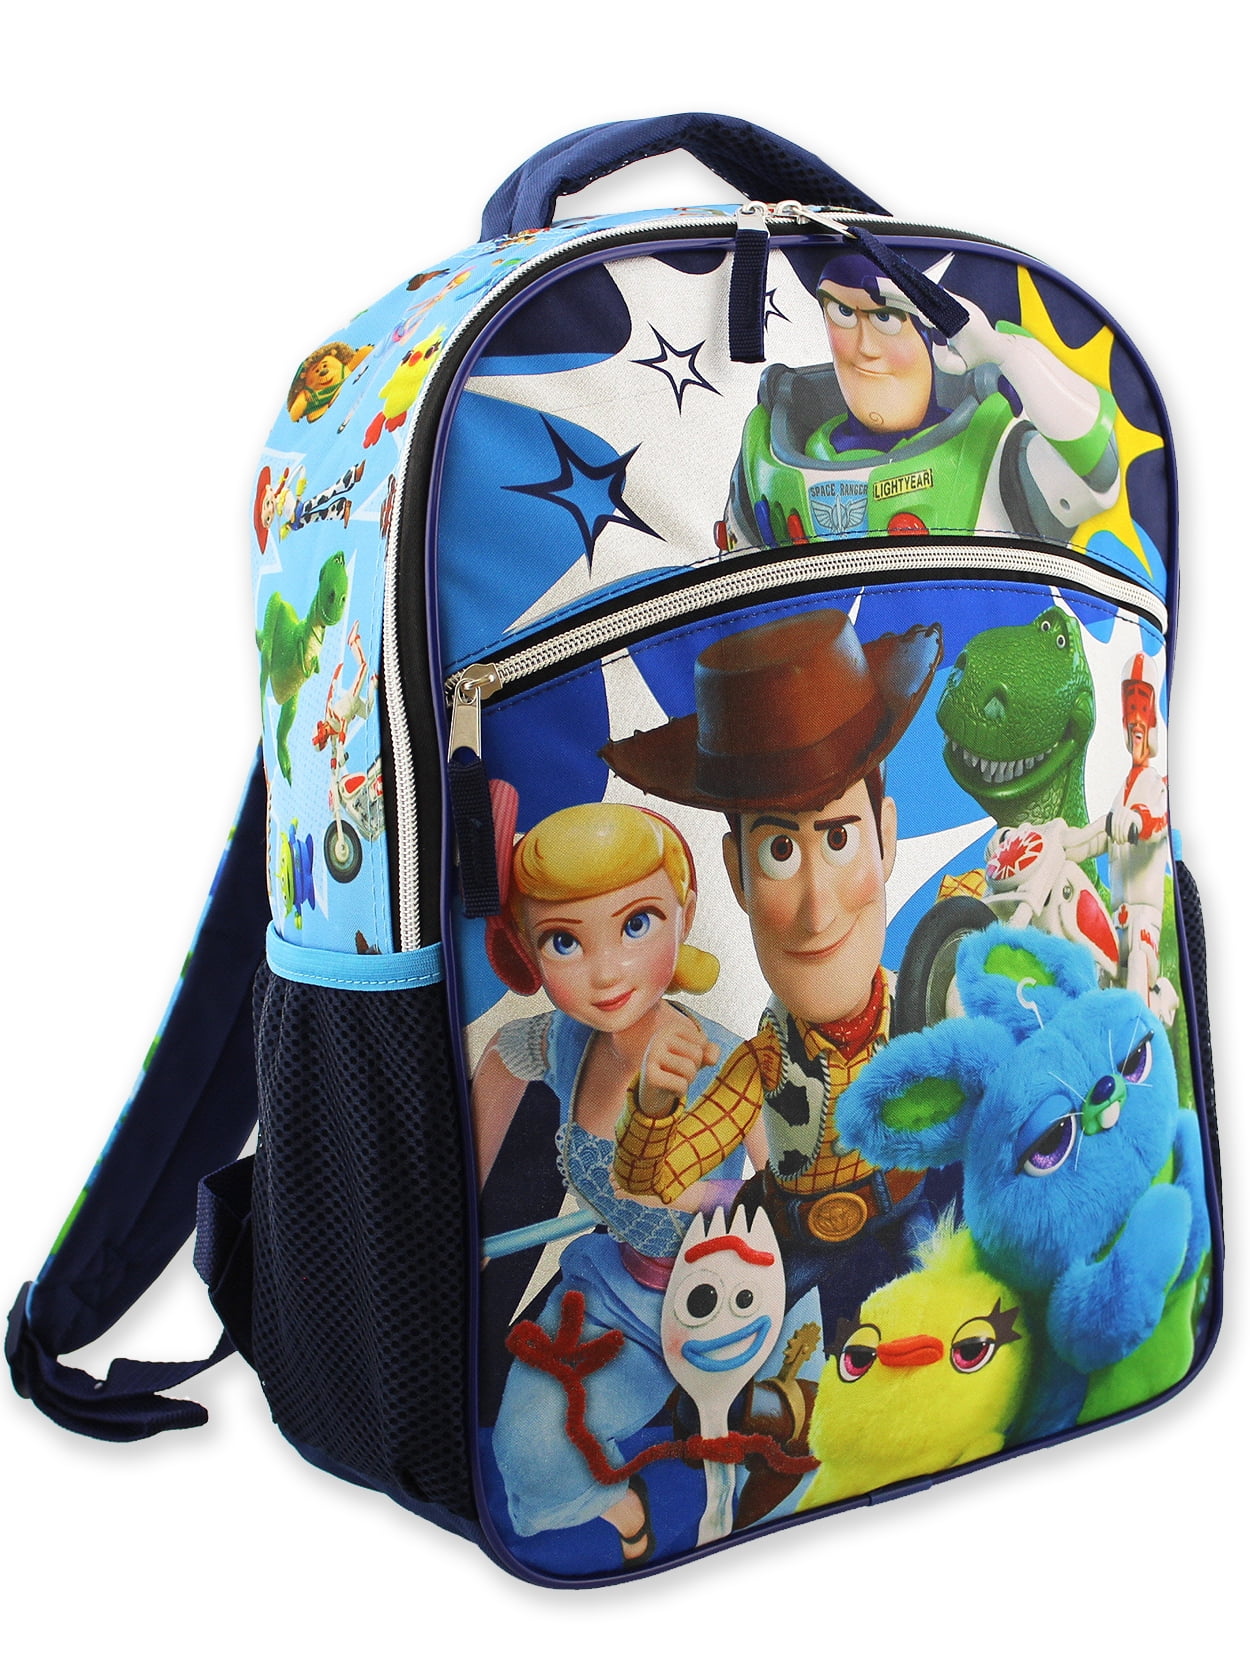 Toy Story 4 Backpack Unisex Students School Bag Travel Bag Kids Bookbag Ruckpack 